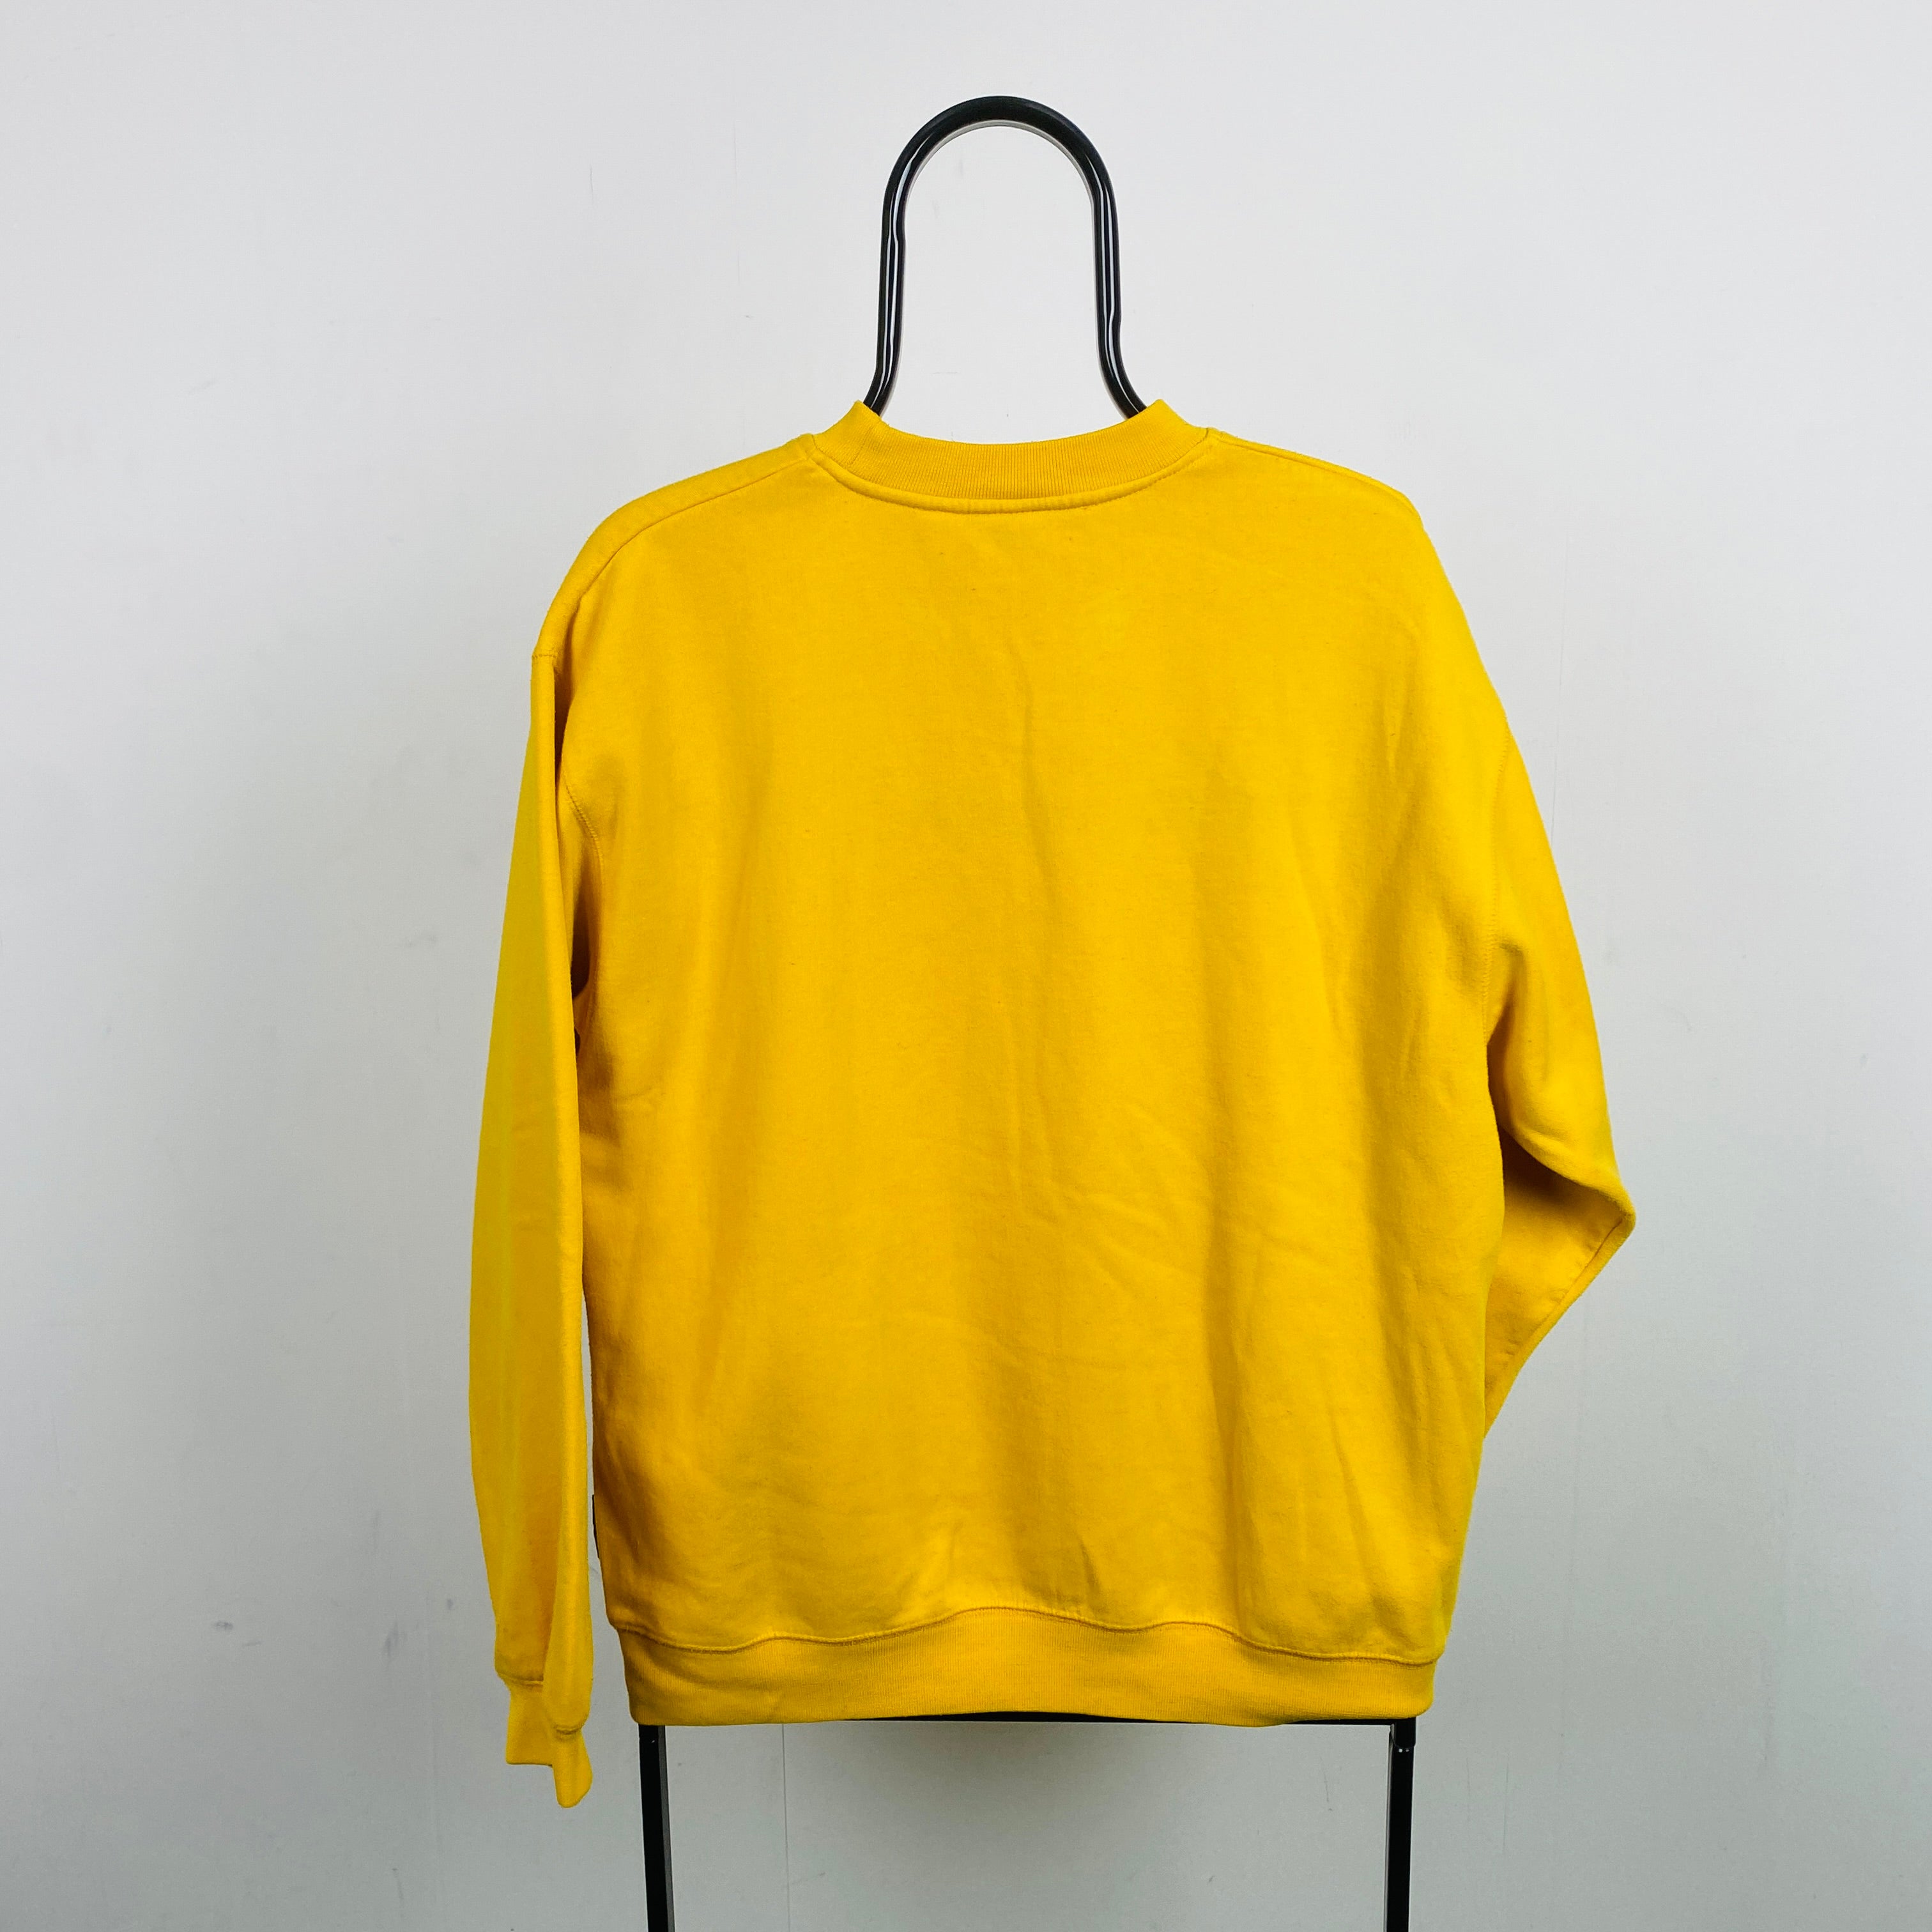 Retro Reebok Sweatshirt Yellow Small